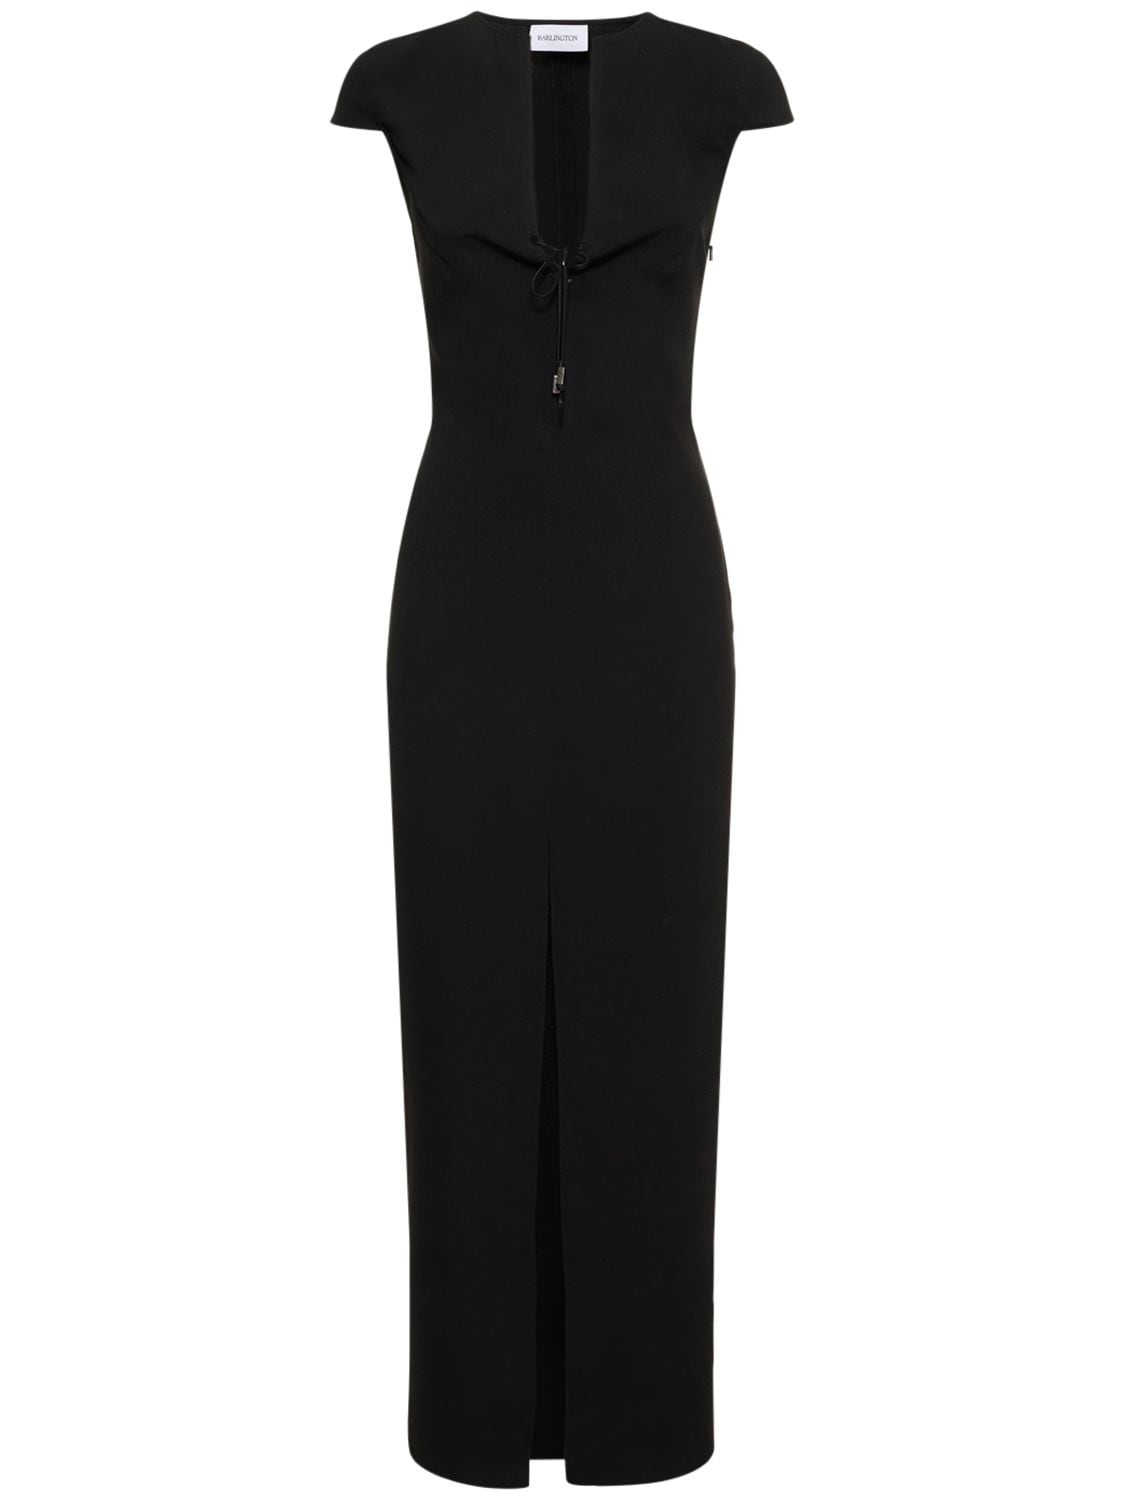 16arlington Seer Crepe Short Sleeve Midi Dress In Black